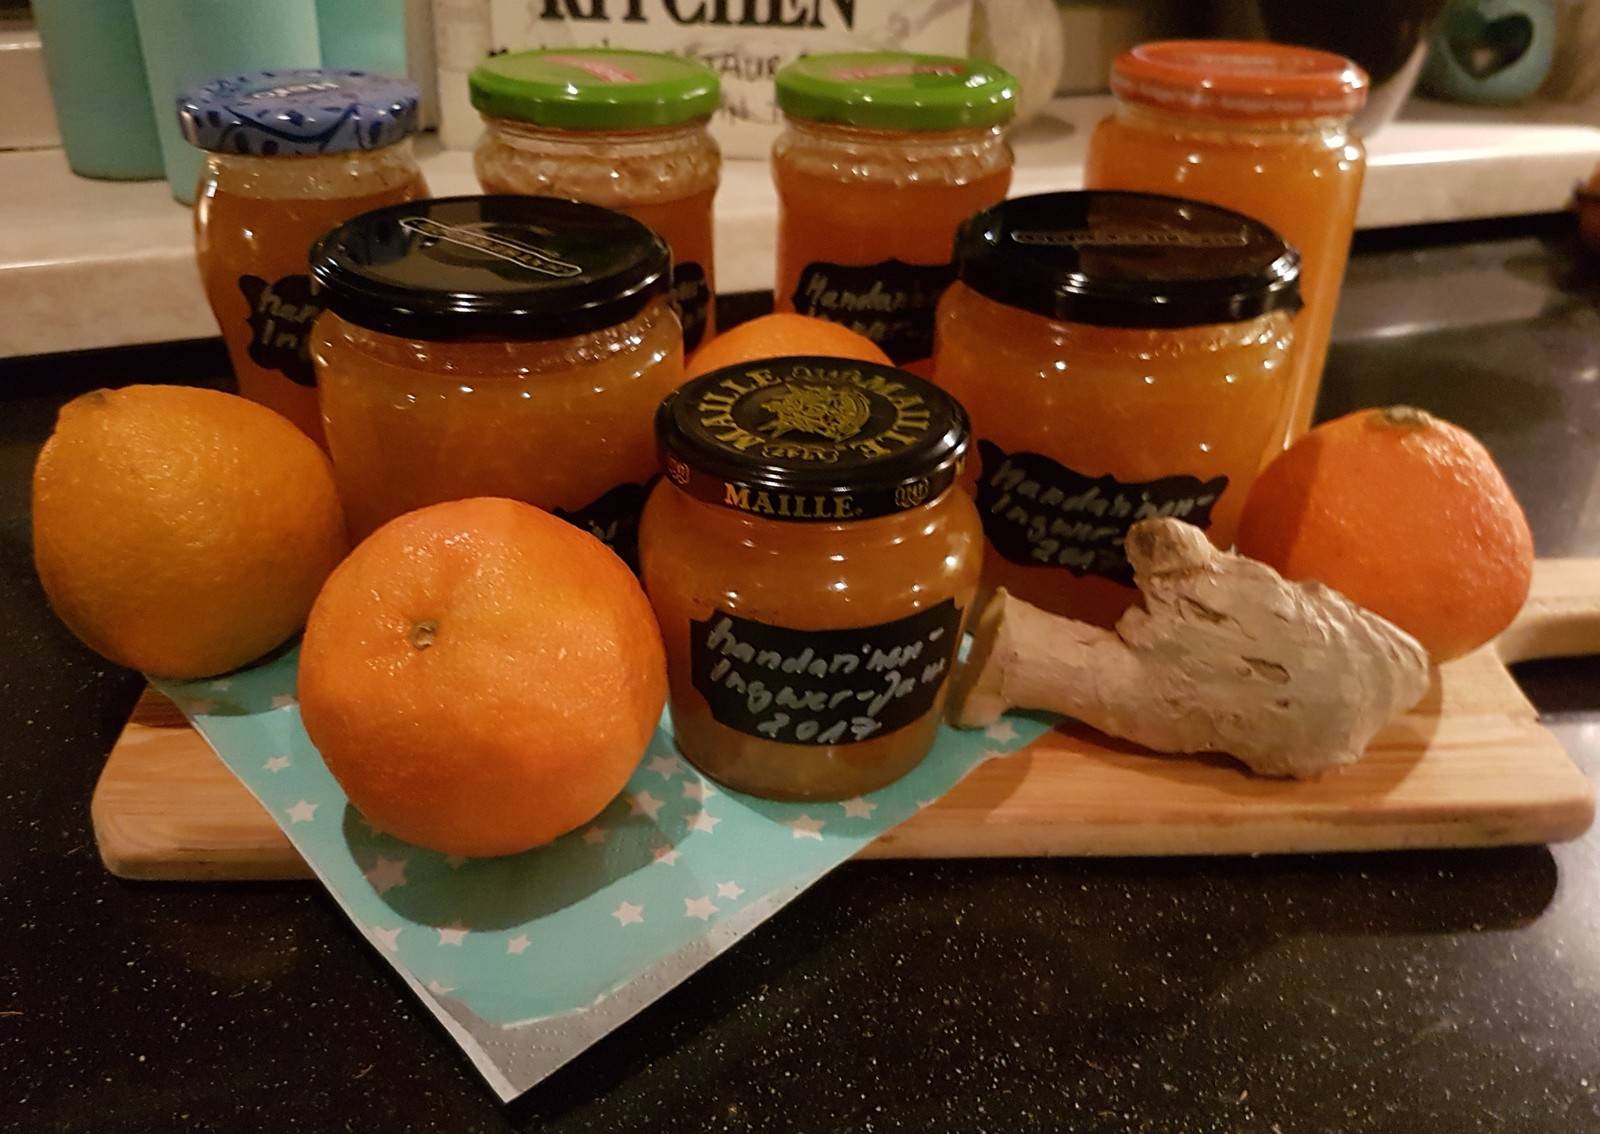 Orangen-Ingwer-Marmelade